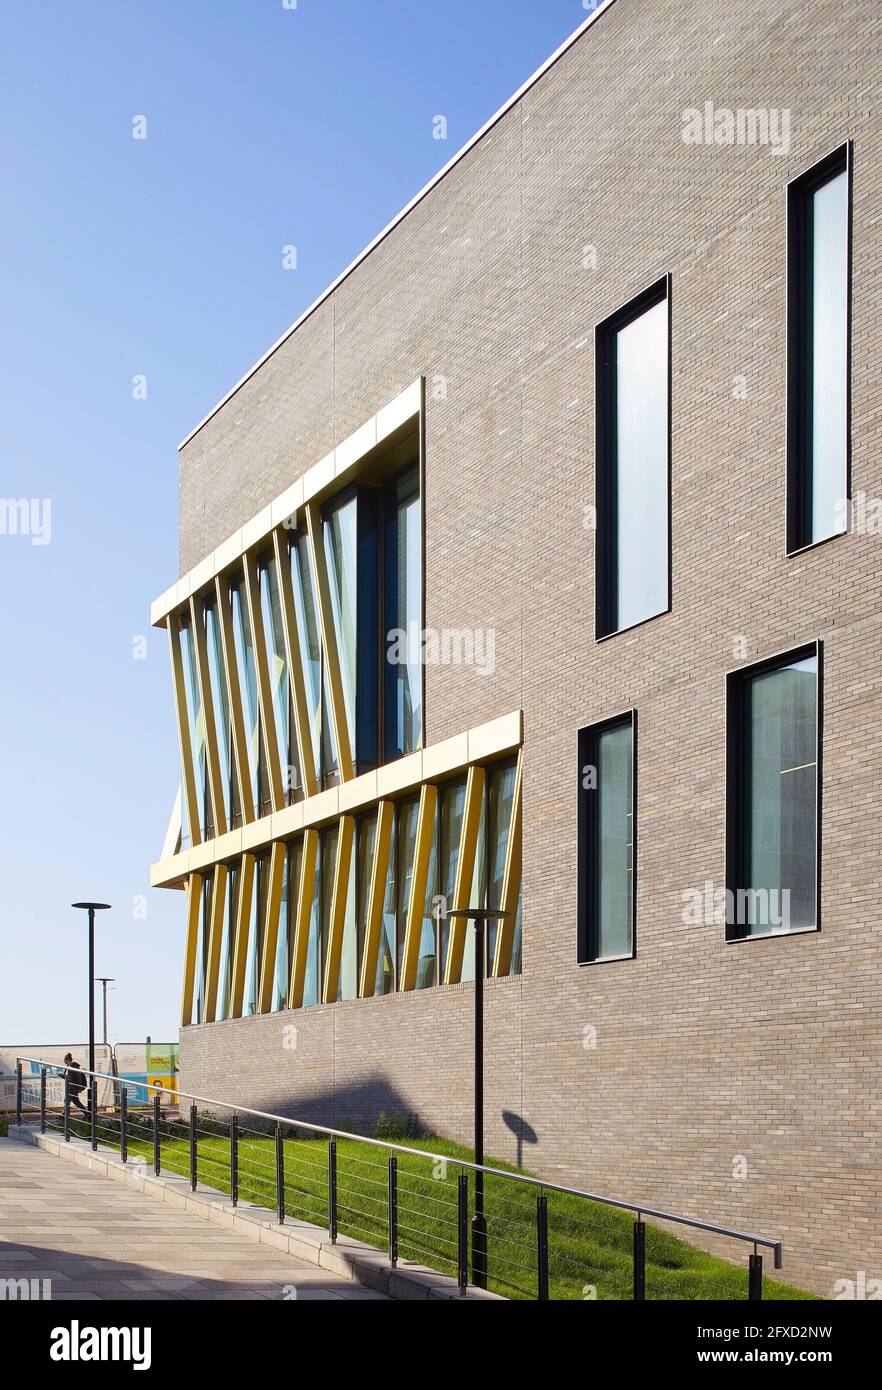 Perspectiva de fachada de ladrillo y paisajismo. University of Birmingham, Collaborative Teaching Laboratory, Birmingham, Reino Unido. Arquitecto: Shepp Foto de stock